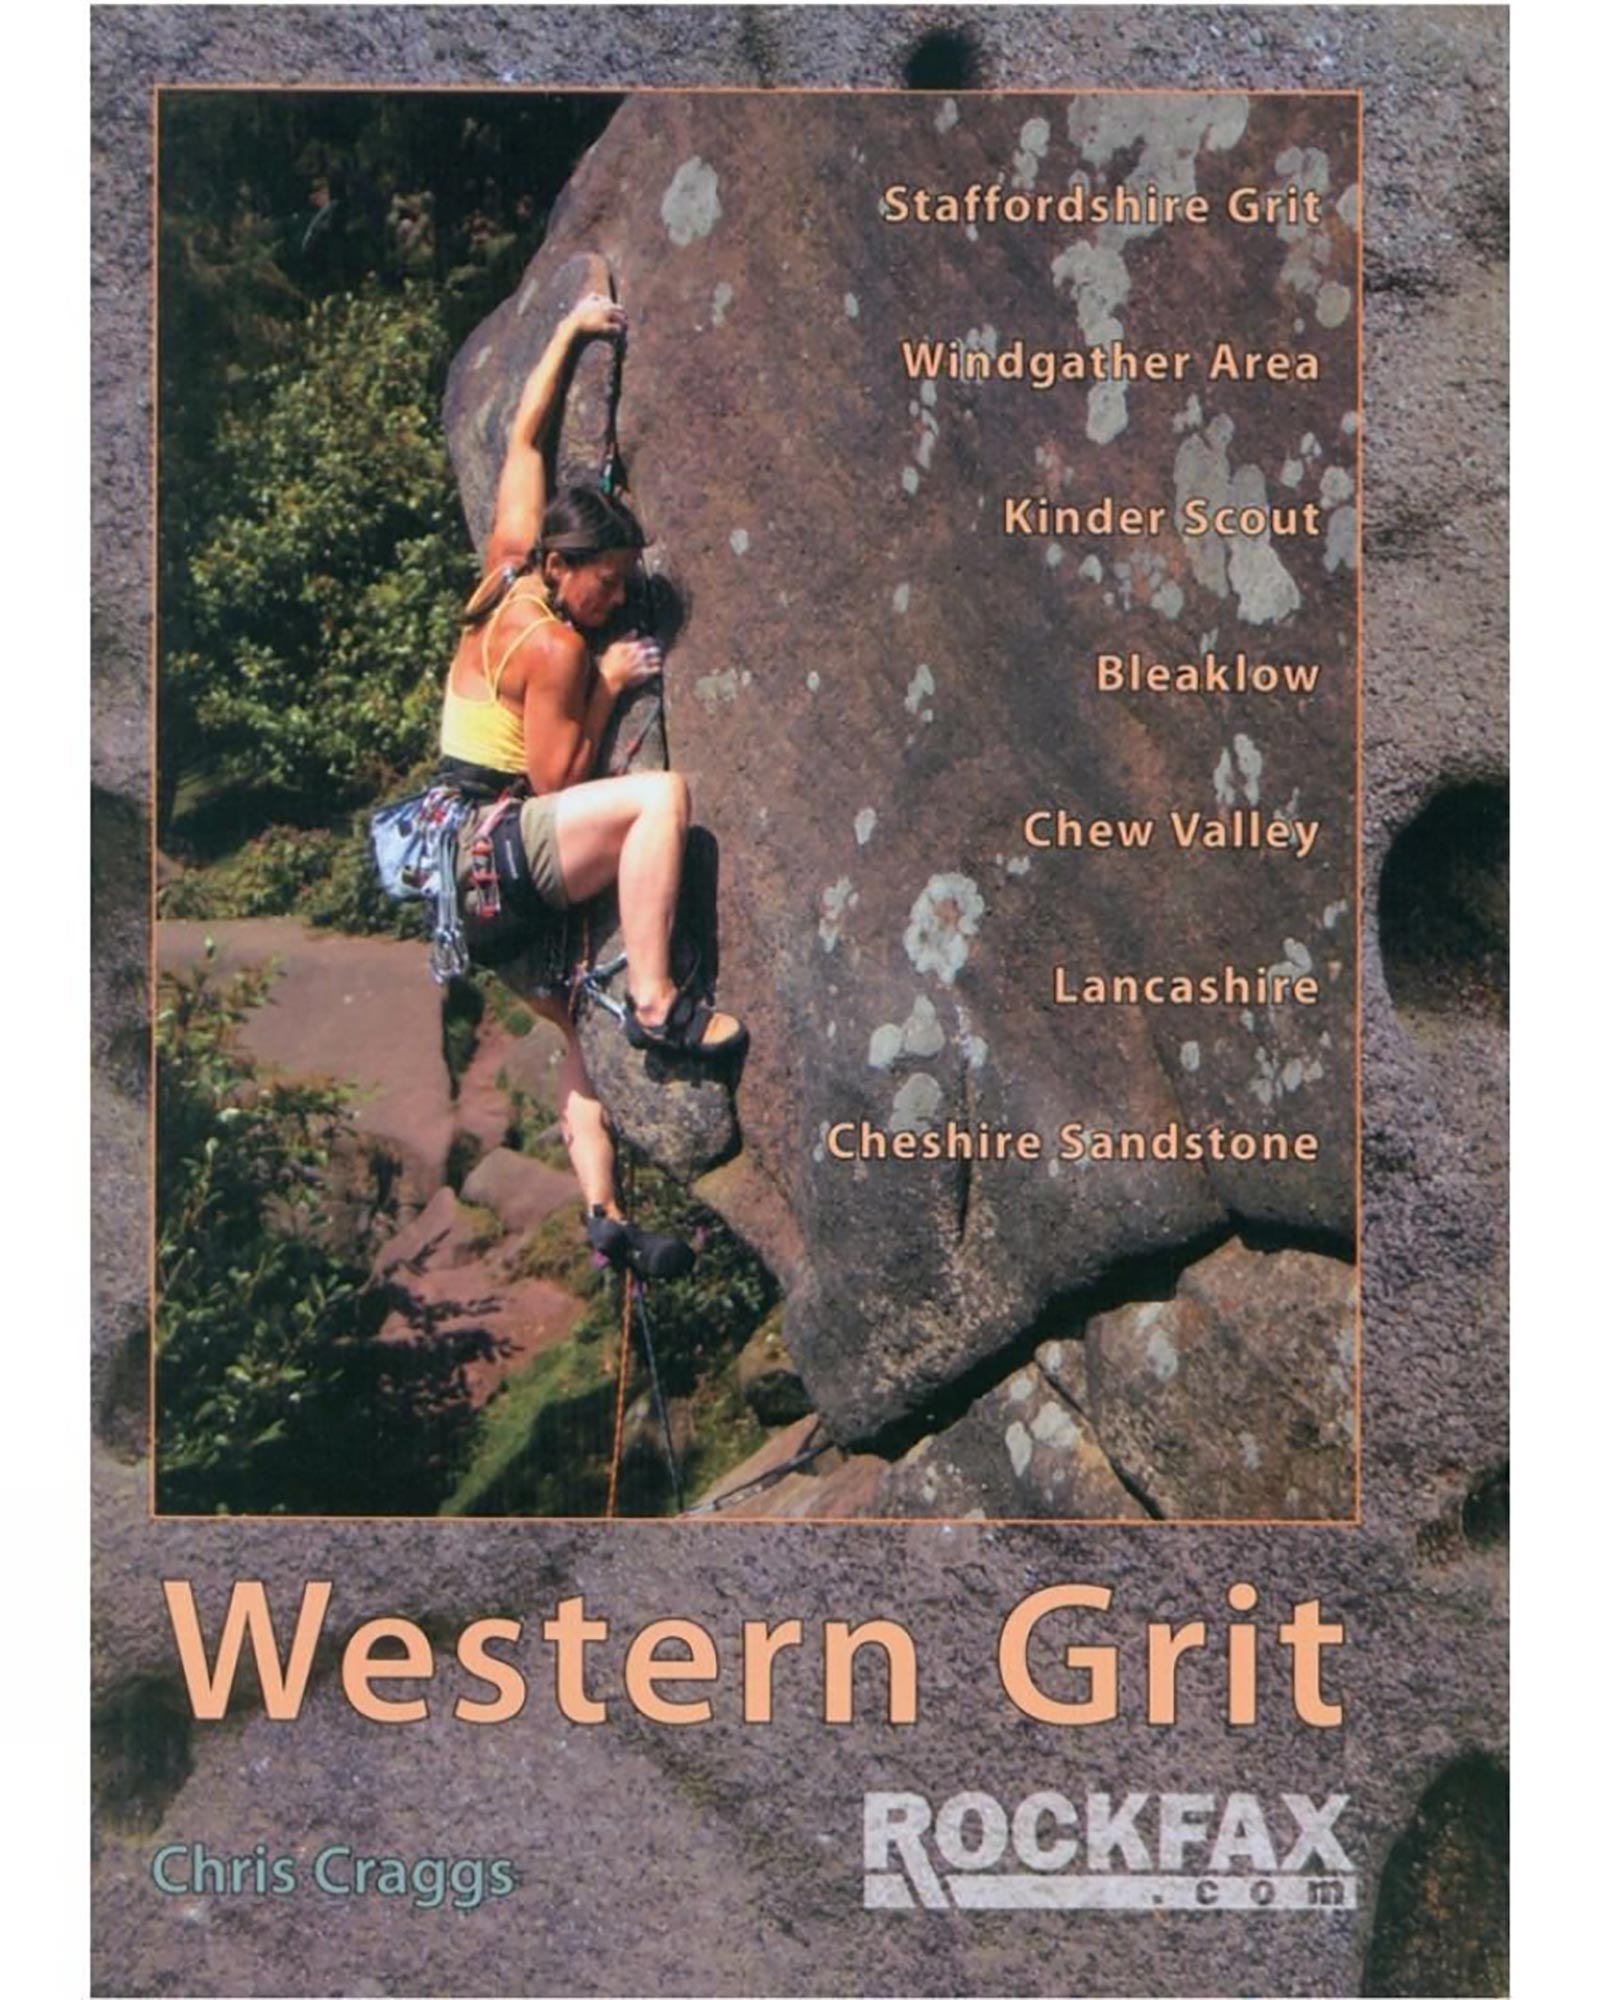 Rockfax Western Grit Rockfax Guide Book